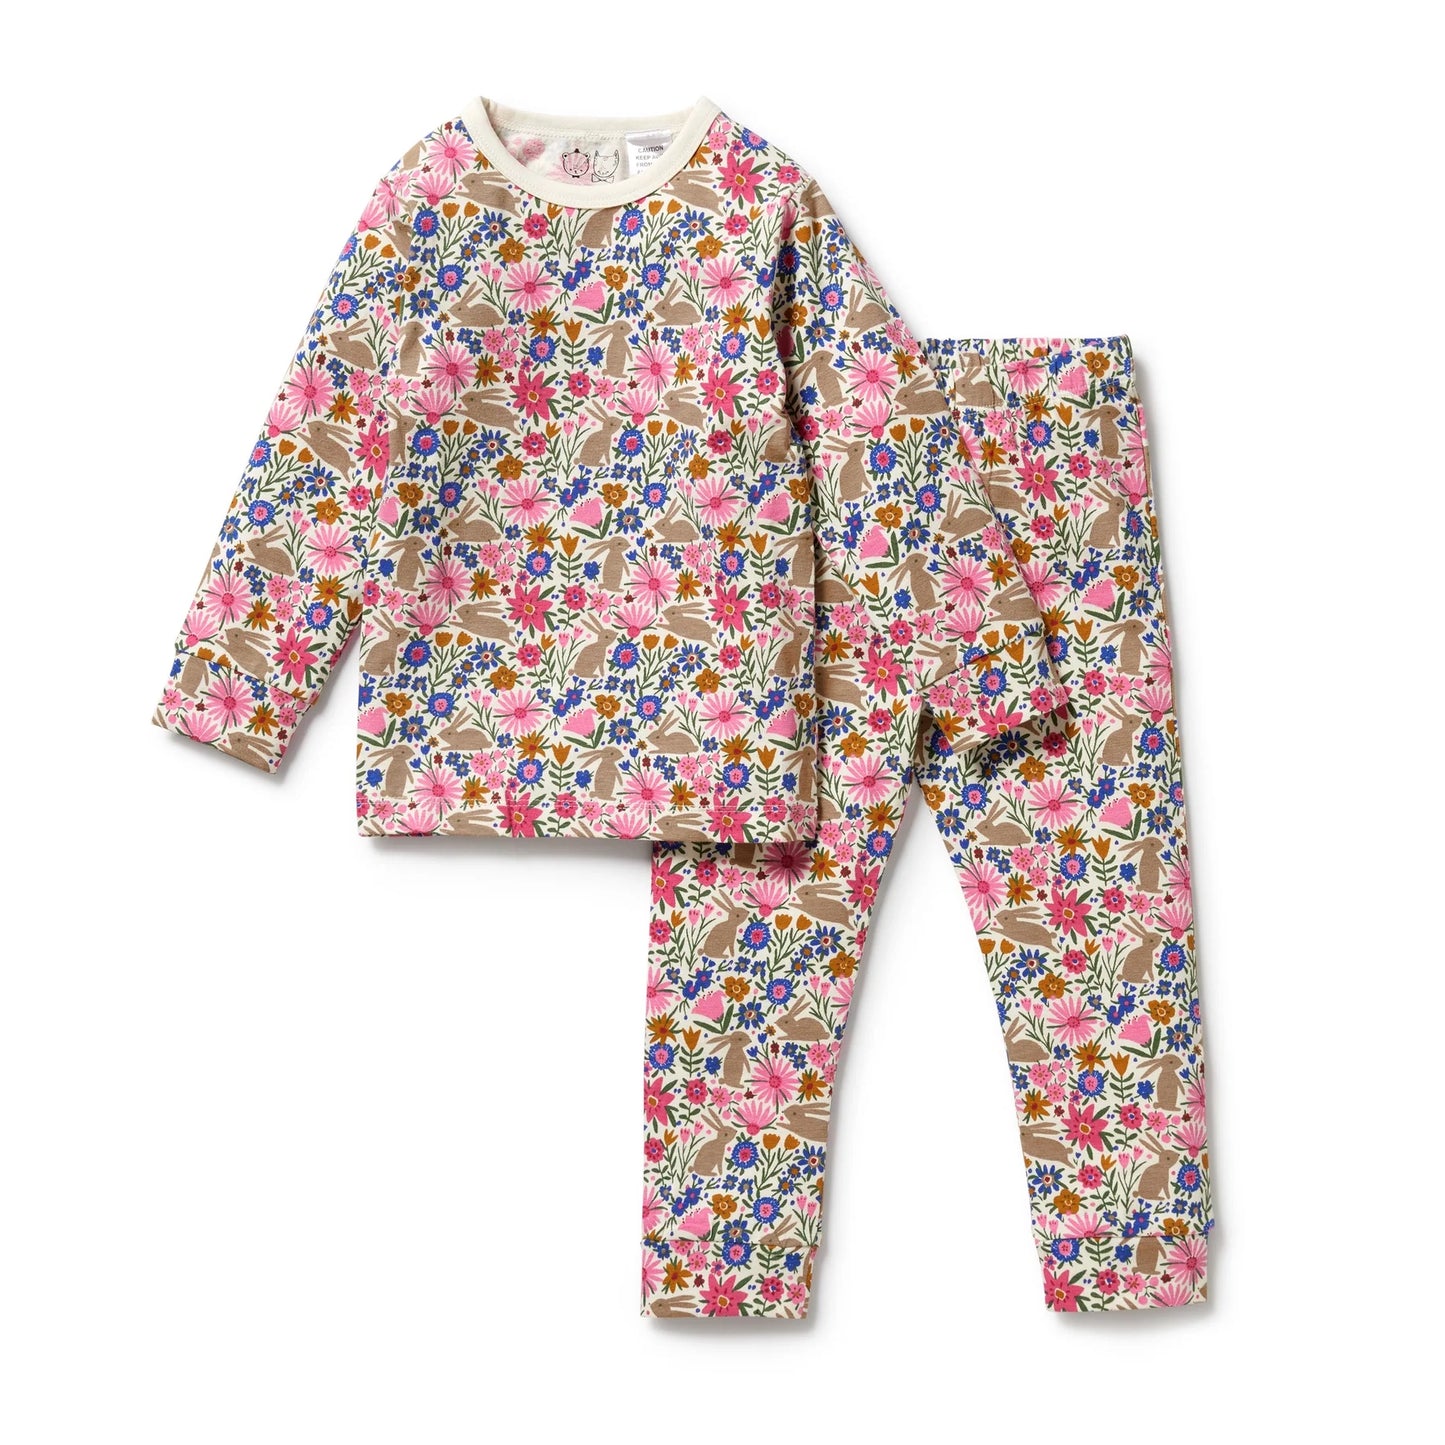 Bunny Hop Long Sleeved Pyjamas - Printed